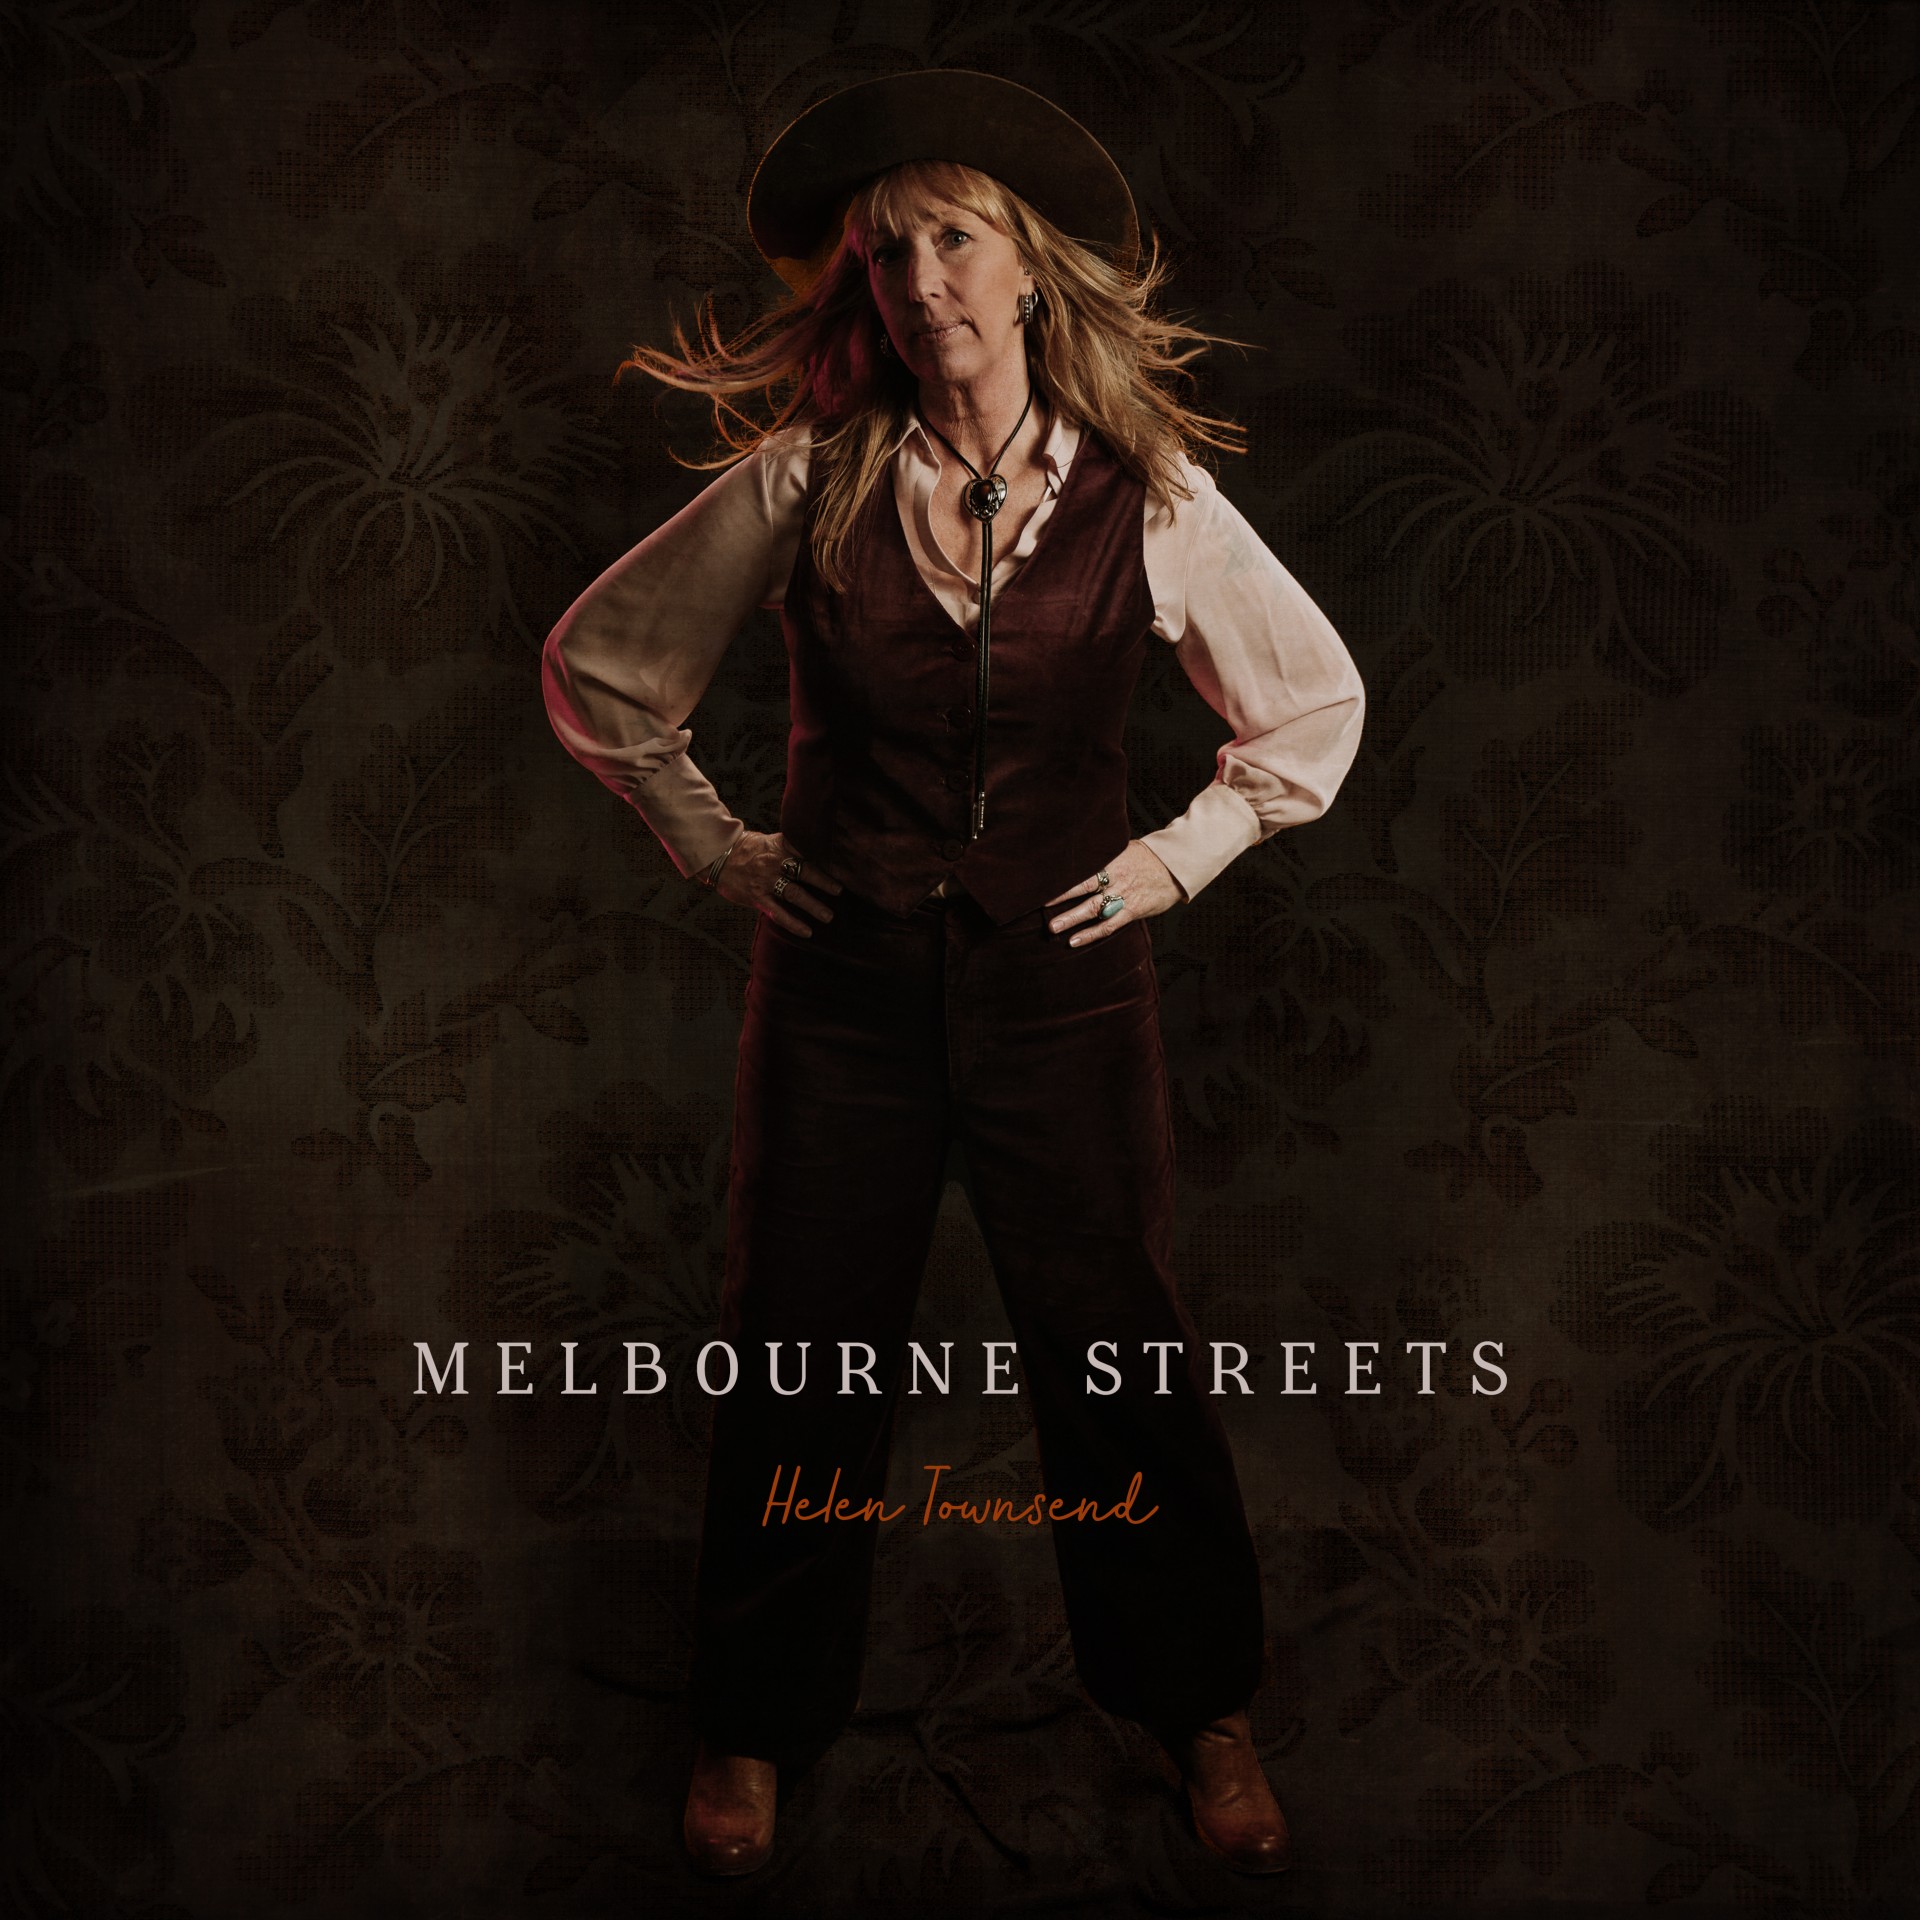 Helen Townsend “Melbourne Streets” single artwork